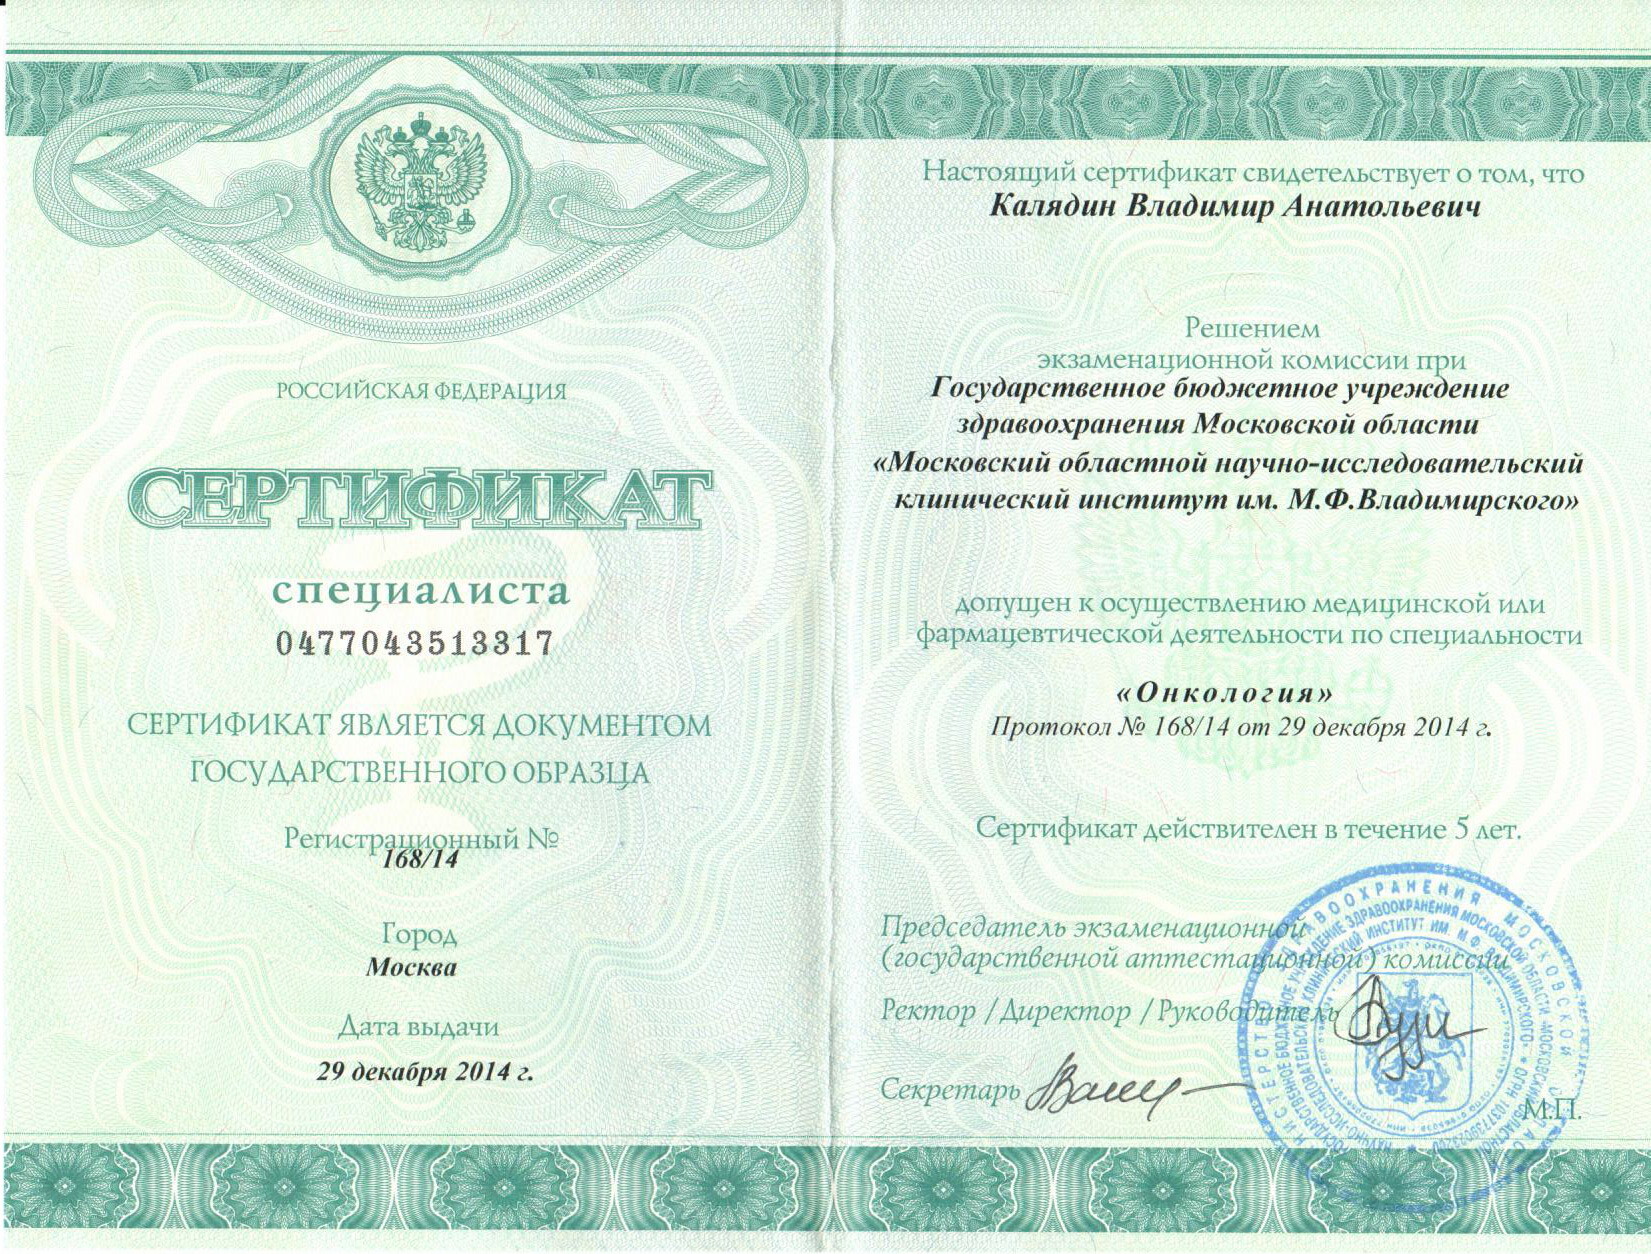 Сертификат специалиста от 29 декабря 2014 года. Онкология.